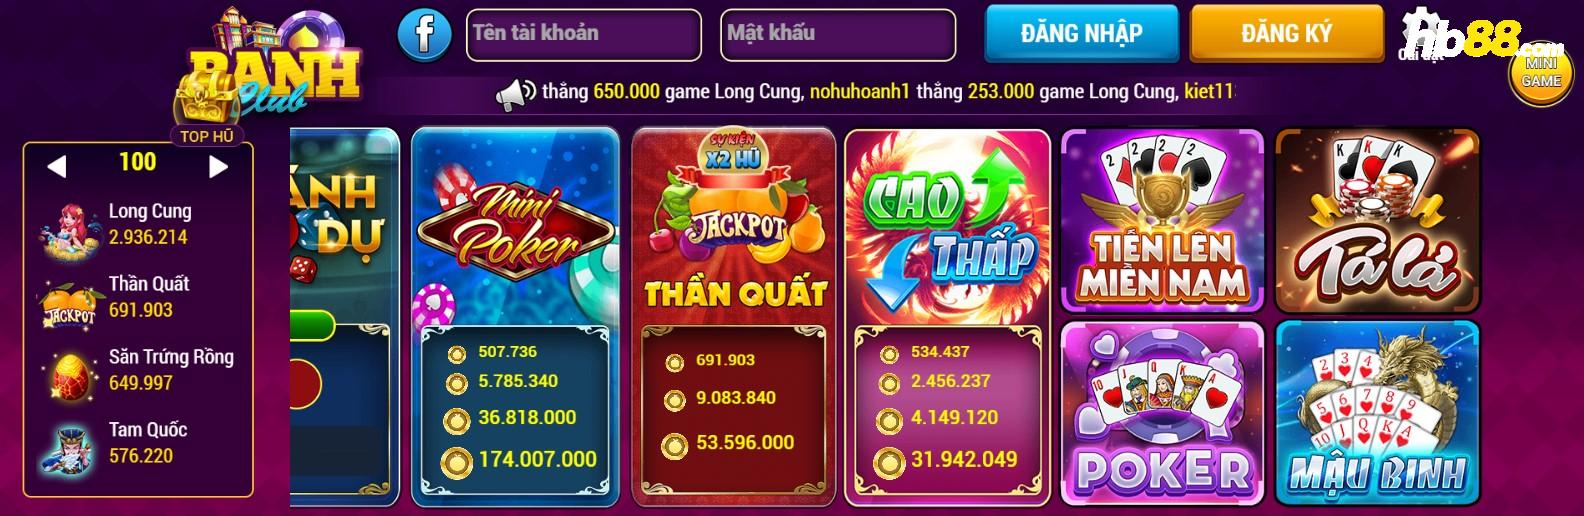 tai-banh-club-game-doi-thuong